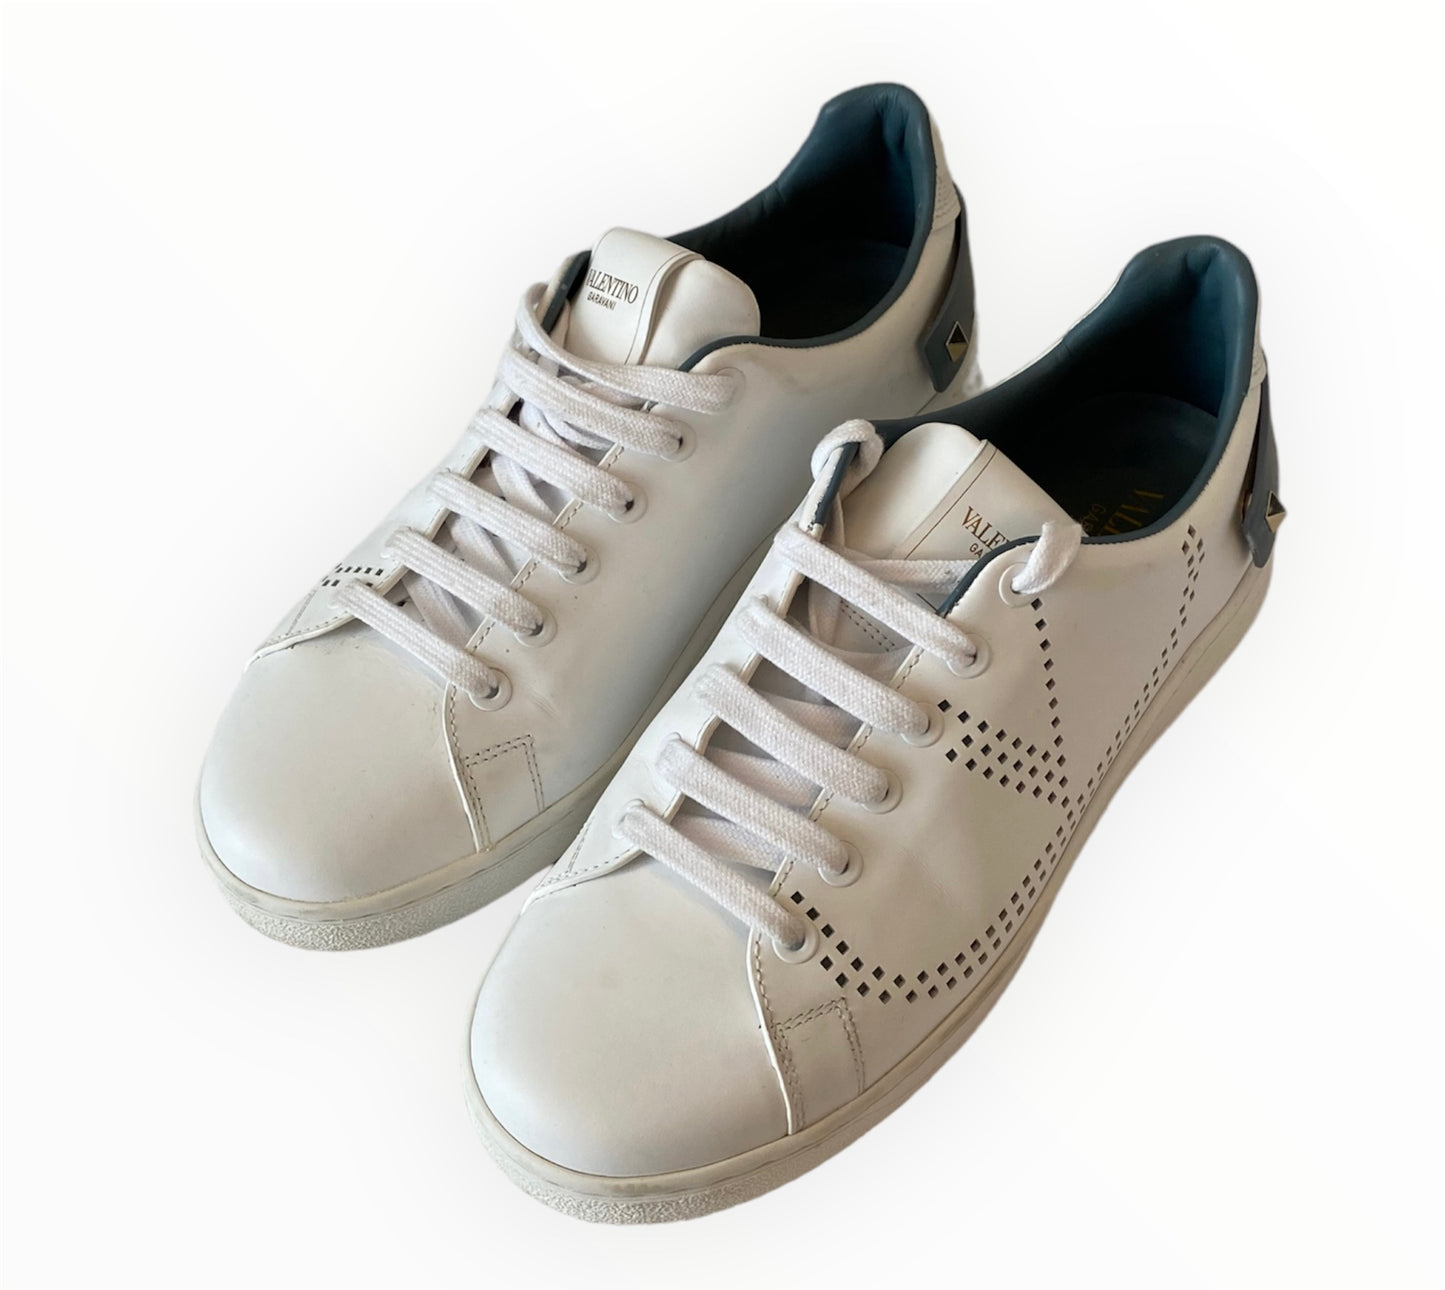 VALENTINO GARAVANI White Sneakers Size 37.5